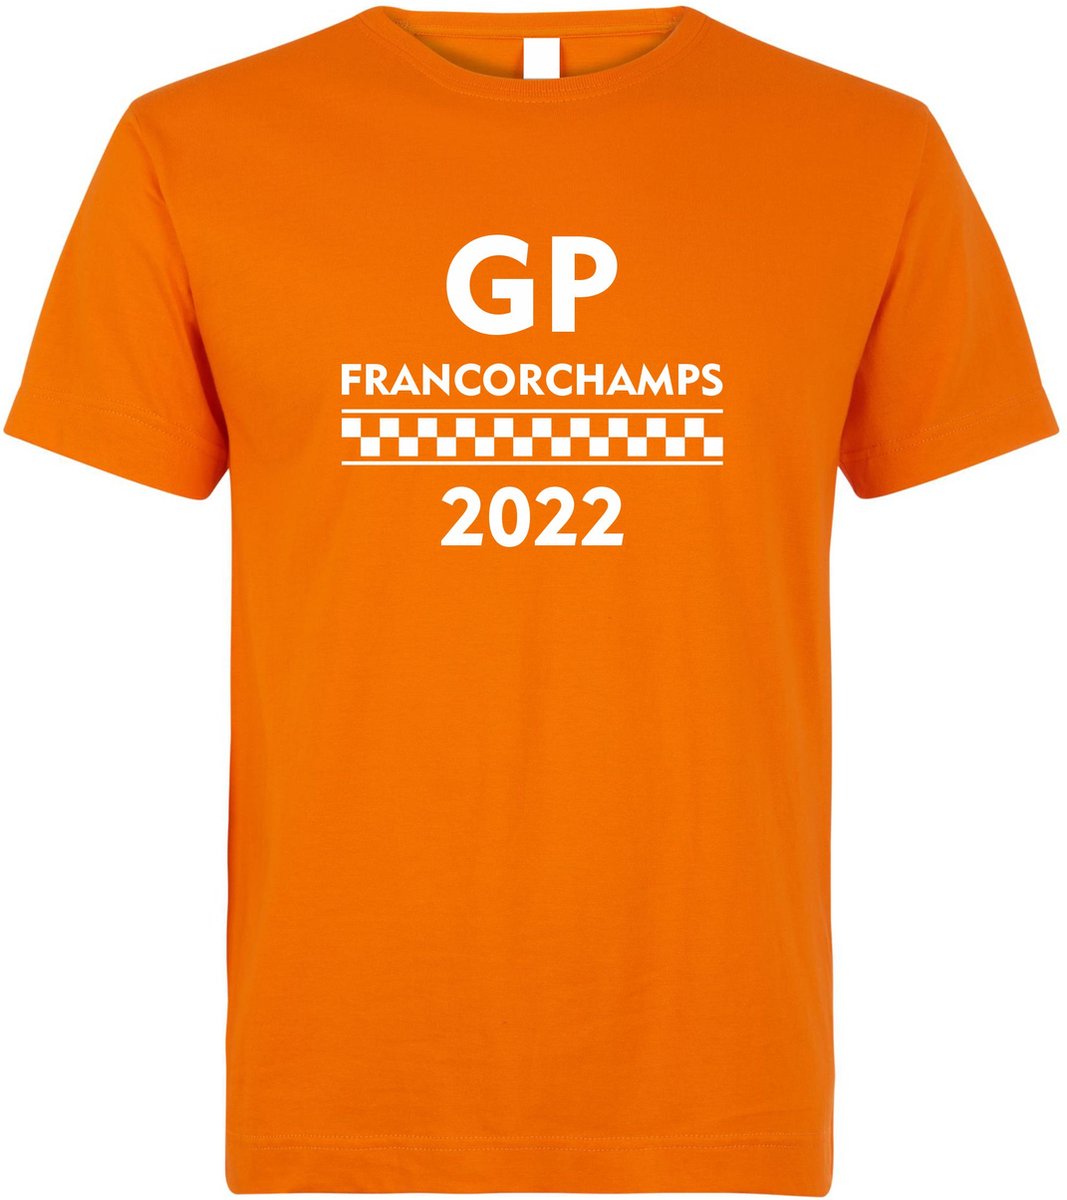 T-shirt kinderen GP Francorchamps 2022 | Max Verstappen / Red Bull Racing / Formule 1 fan | Grand Prix Circuit Spa-Francorchamps | kleding shirt | Oranje | maat 128